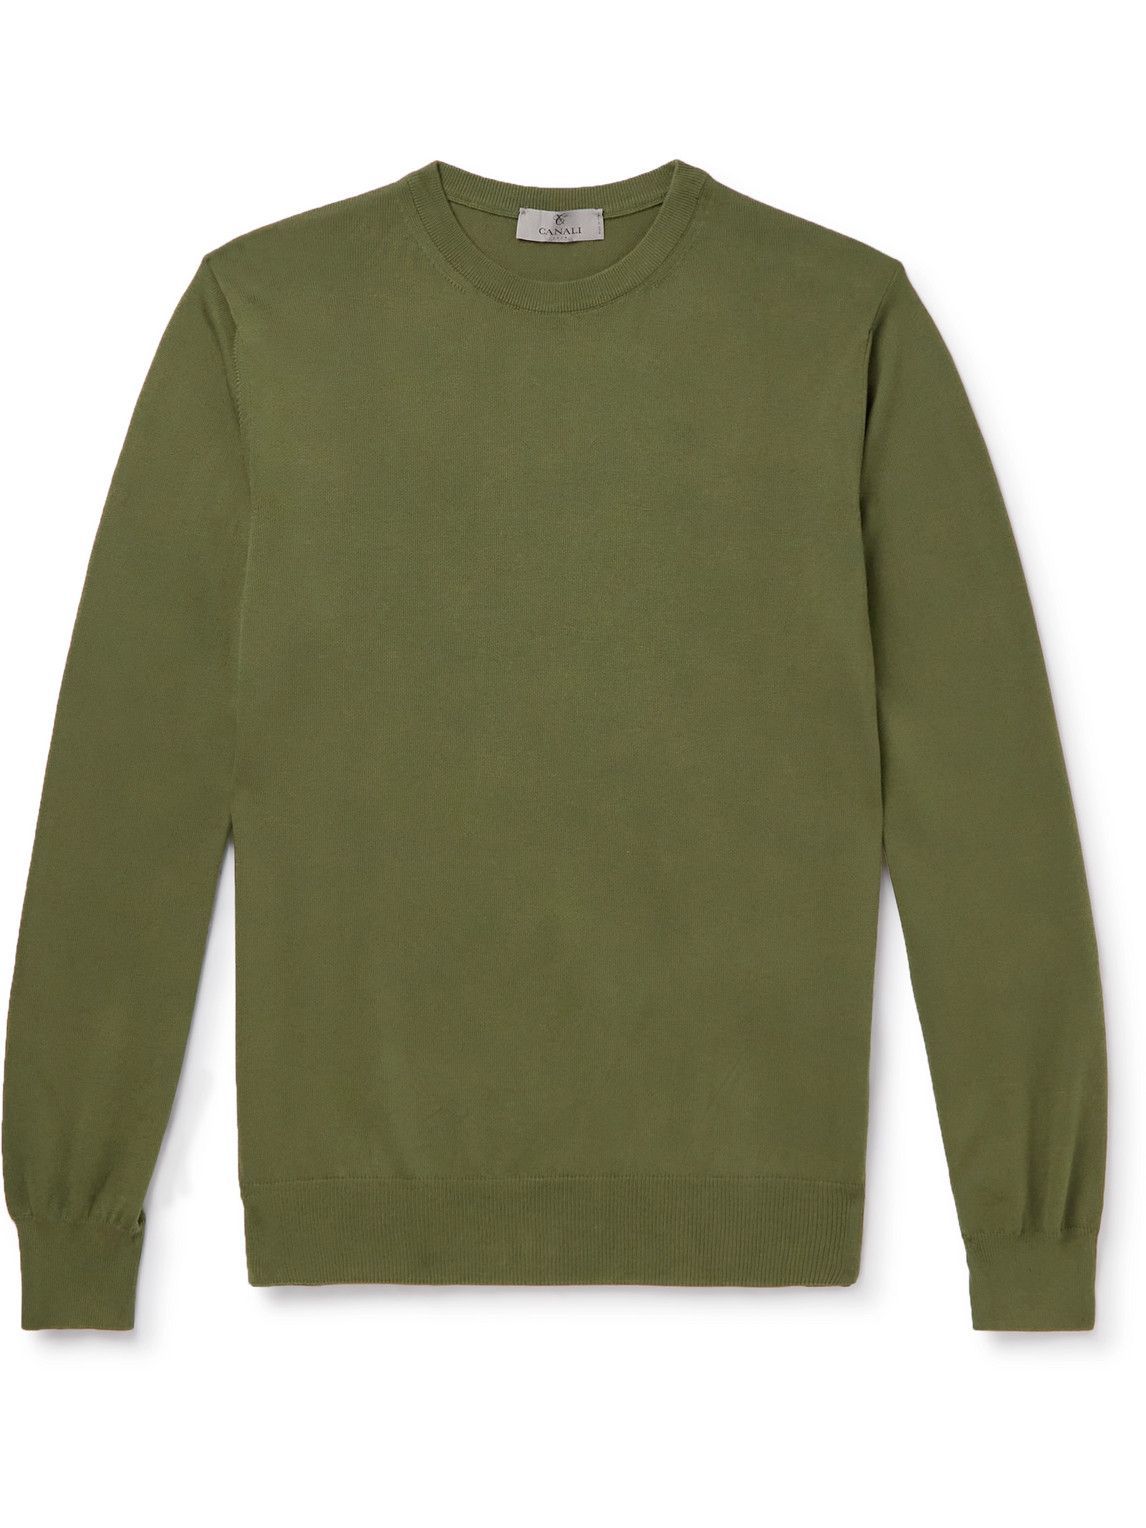 Canali - Cotton Sweater - Green Canali